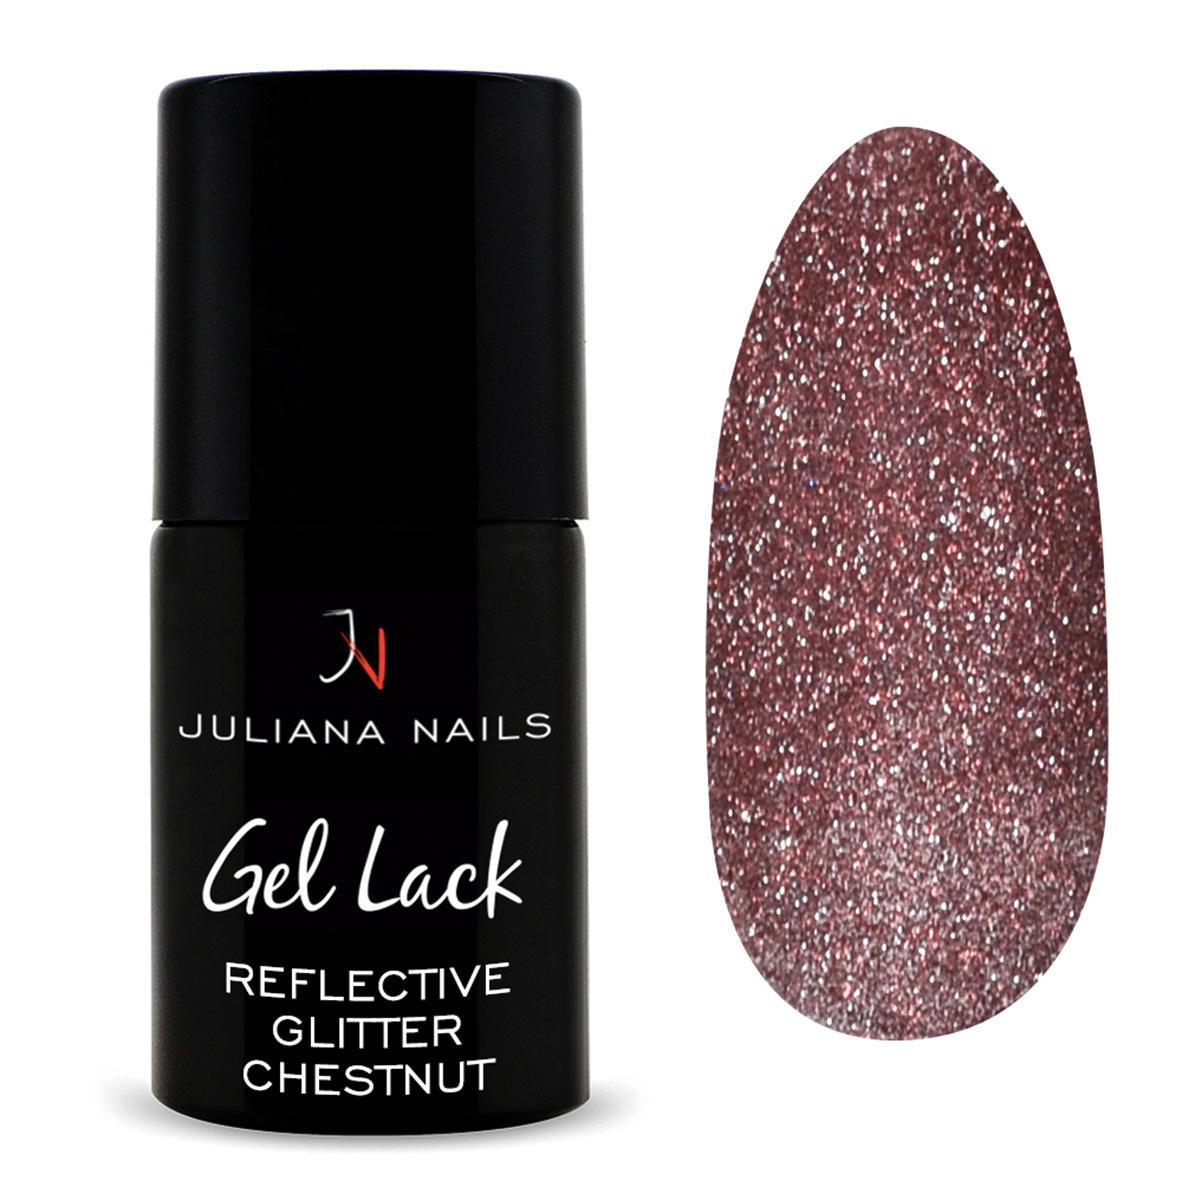 juliana nails gel lack glitter/shimmer reflective glitter chestnut, flasche 6 ml castano glitterato riflettente